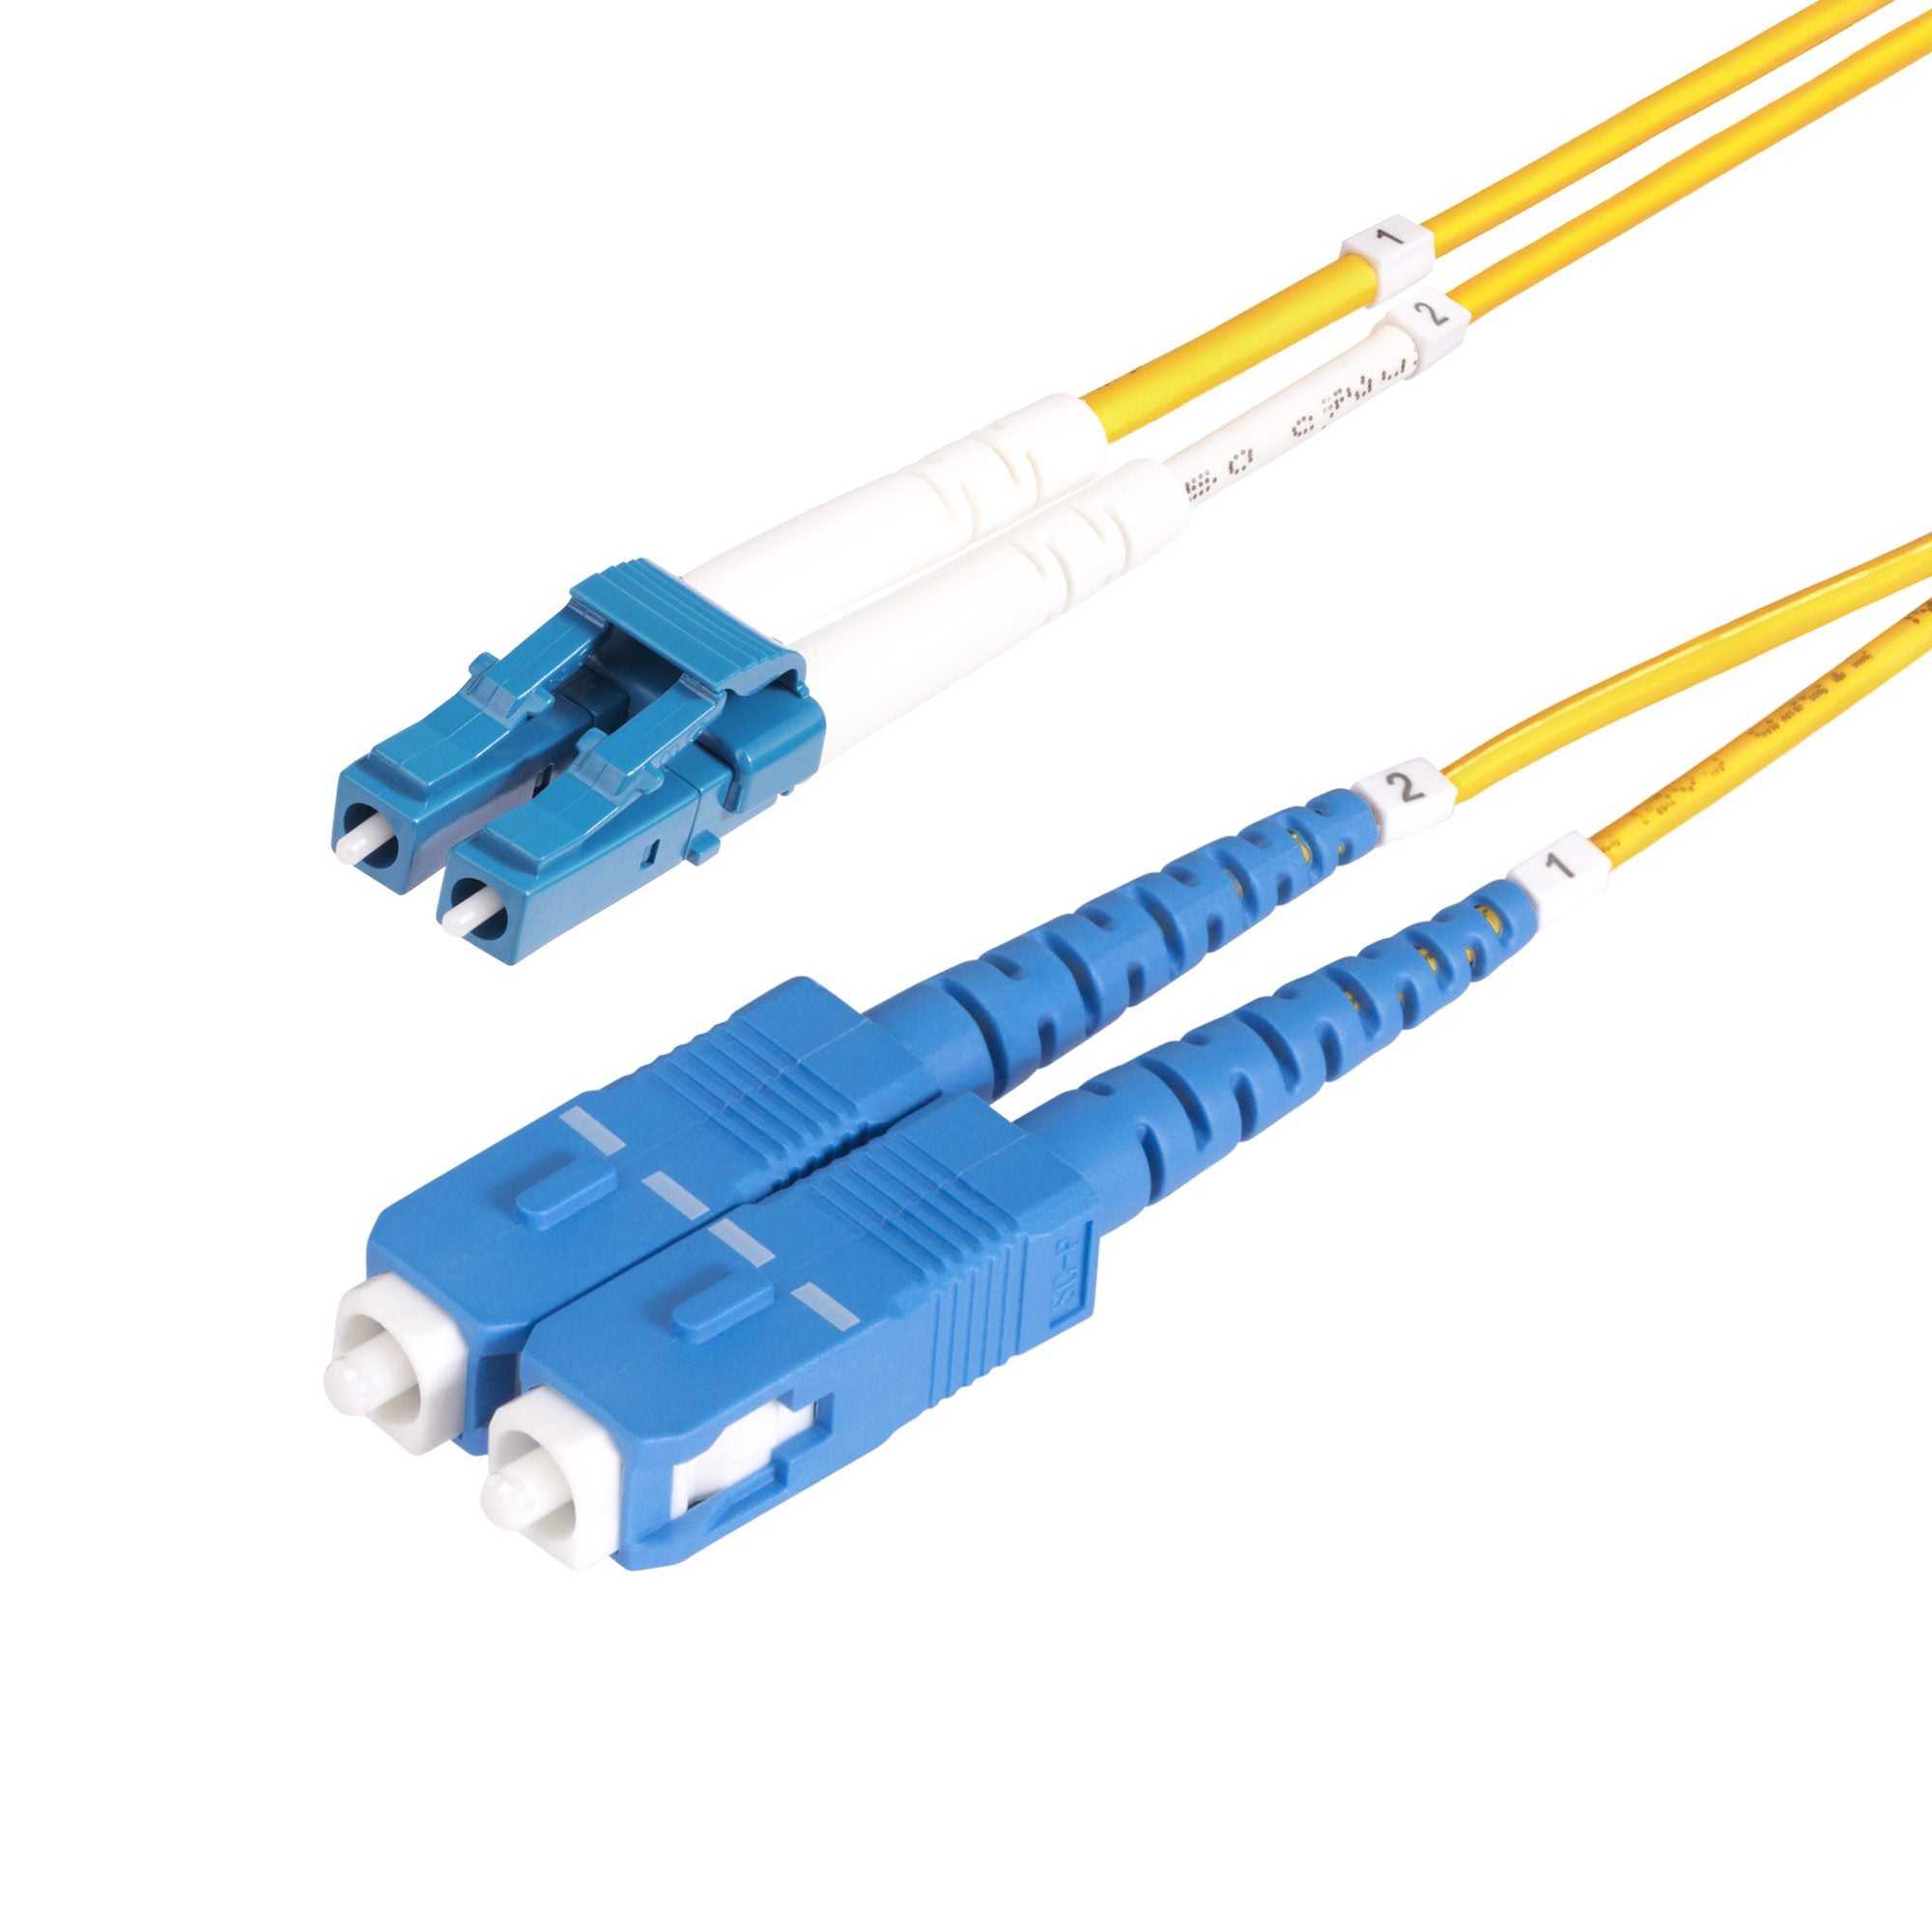 7m (23ft) LC to SC (UPC) OS2 Single Mode Duplex Fiber Optic Cable